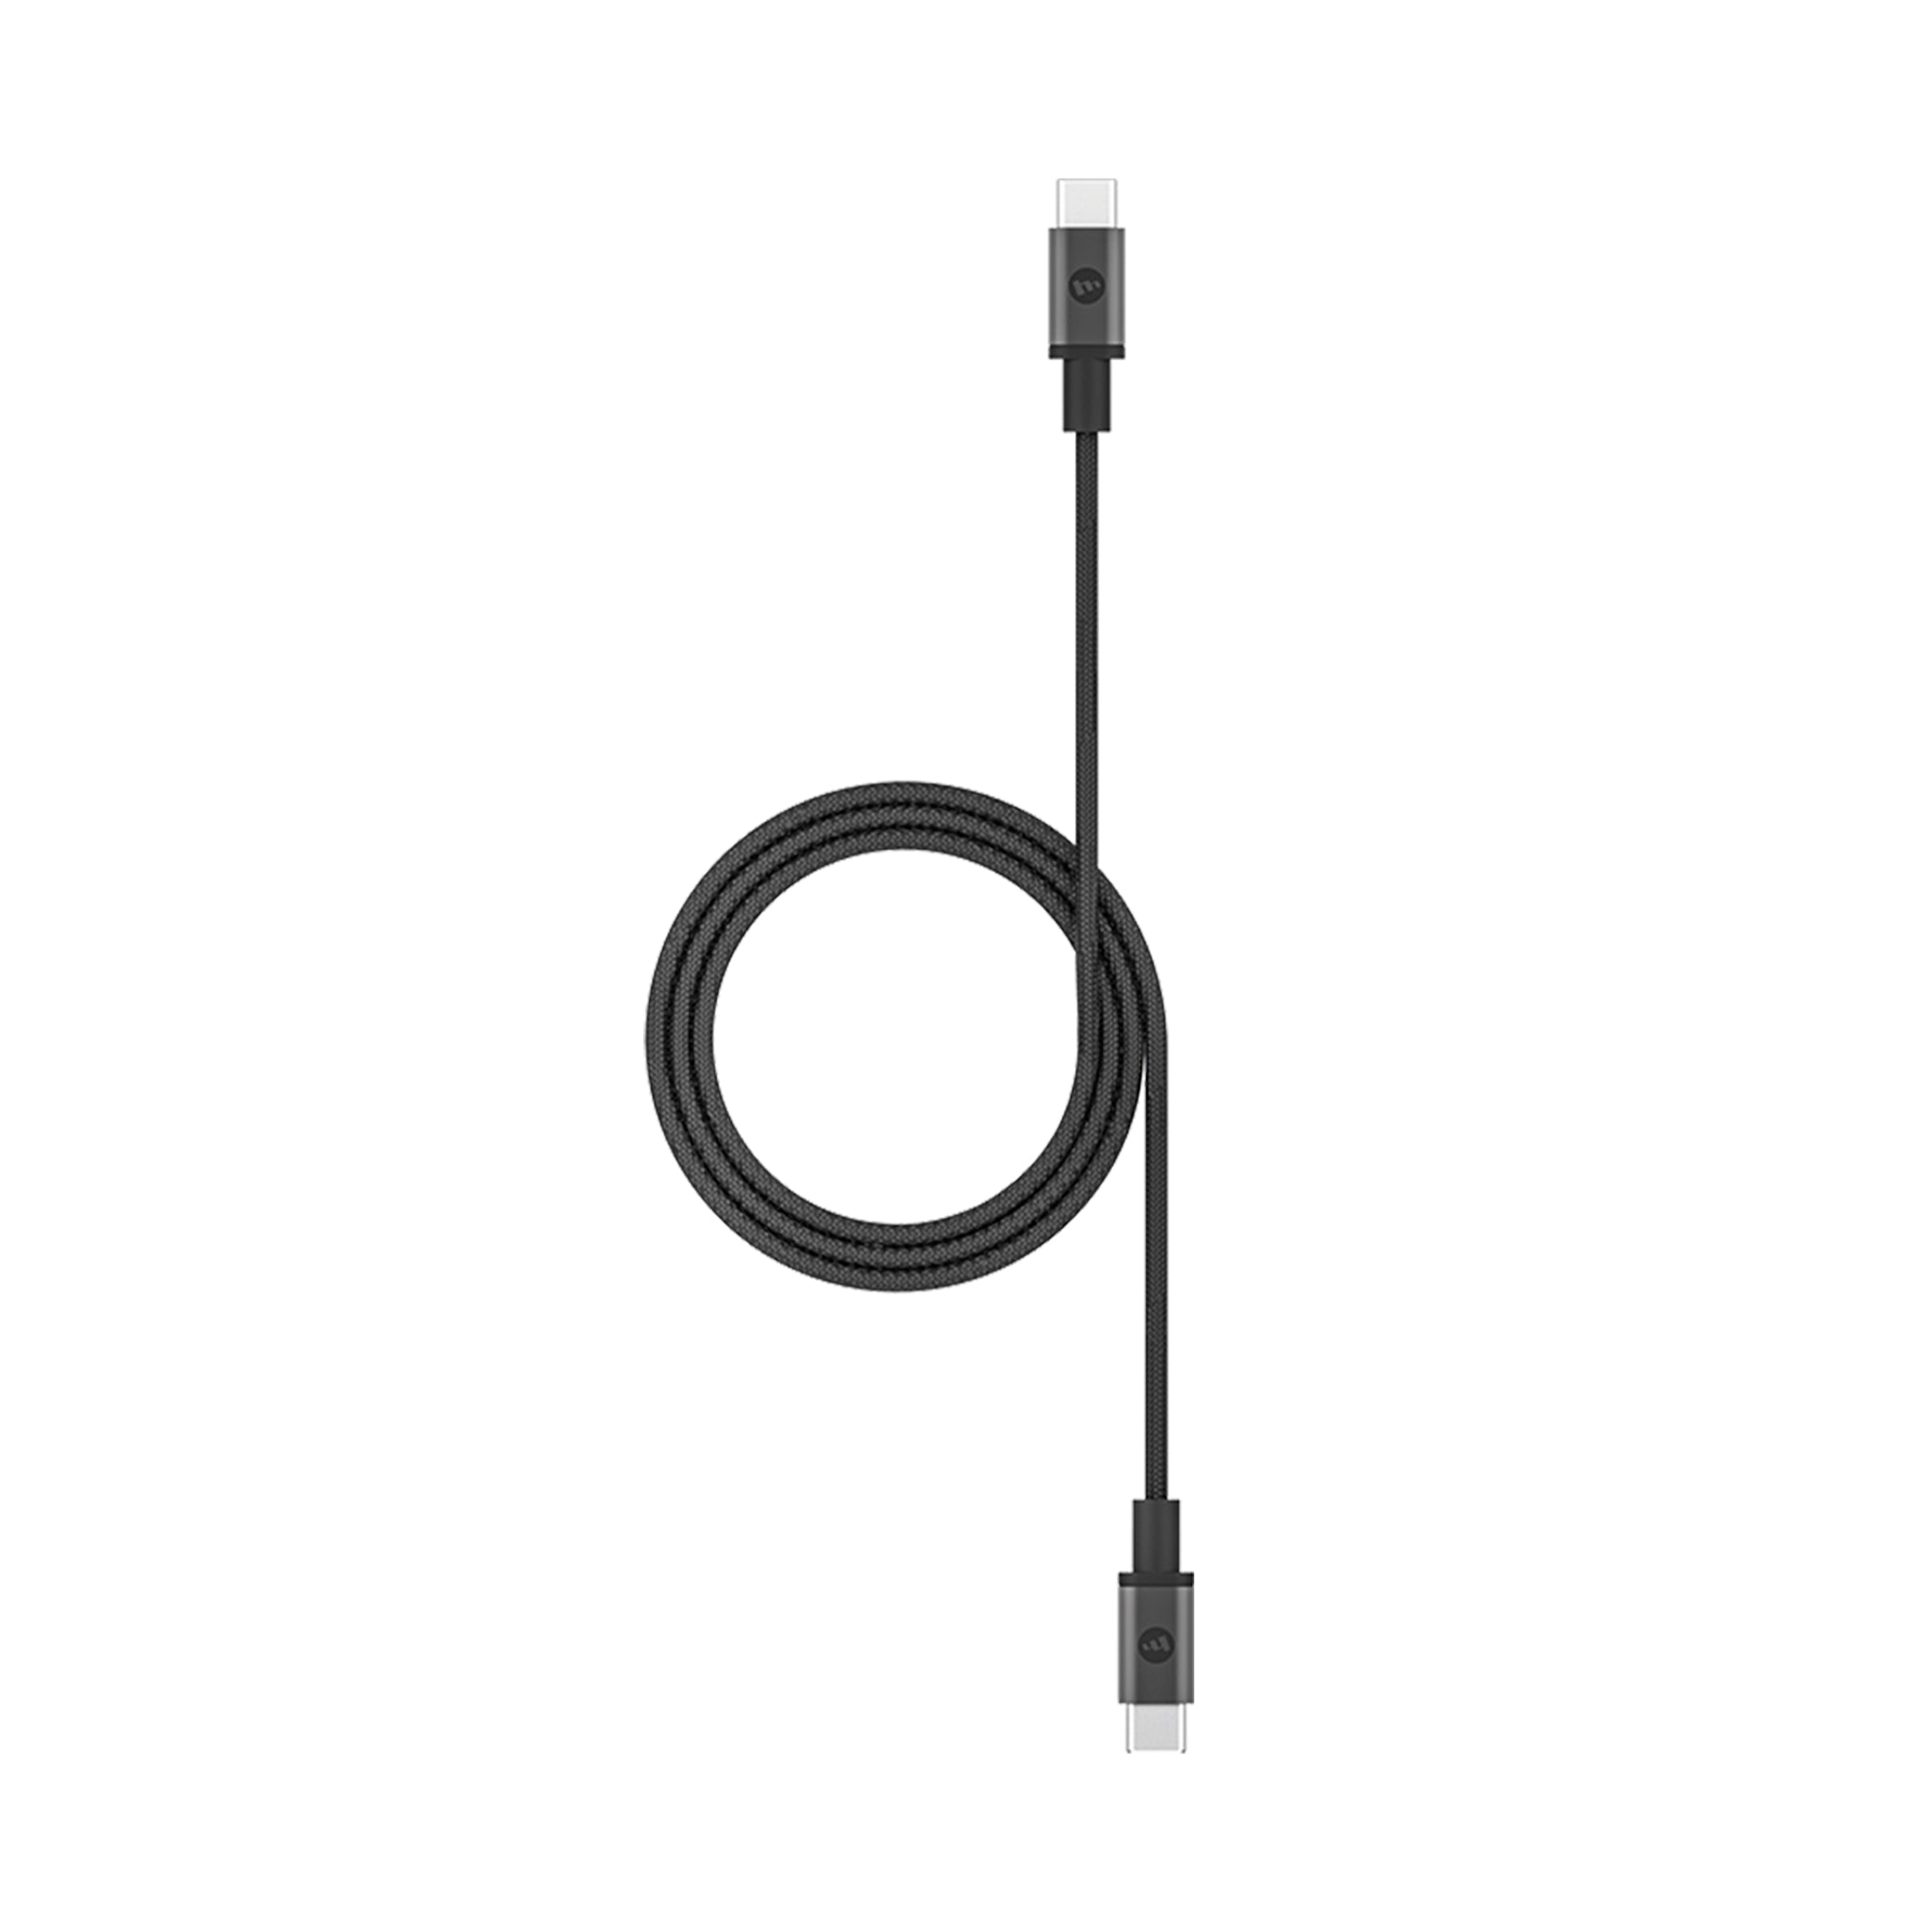 Mophie - Usb C Cable 5ft - Black